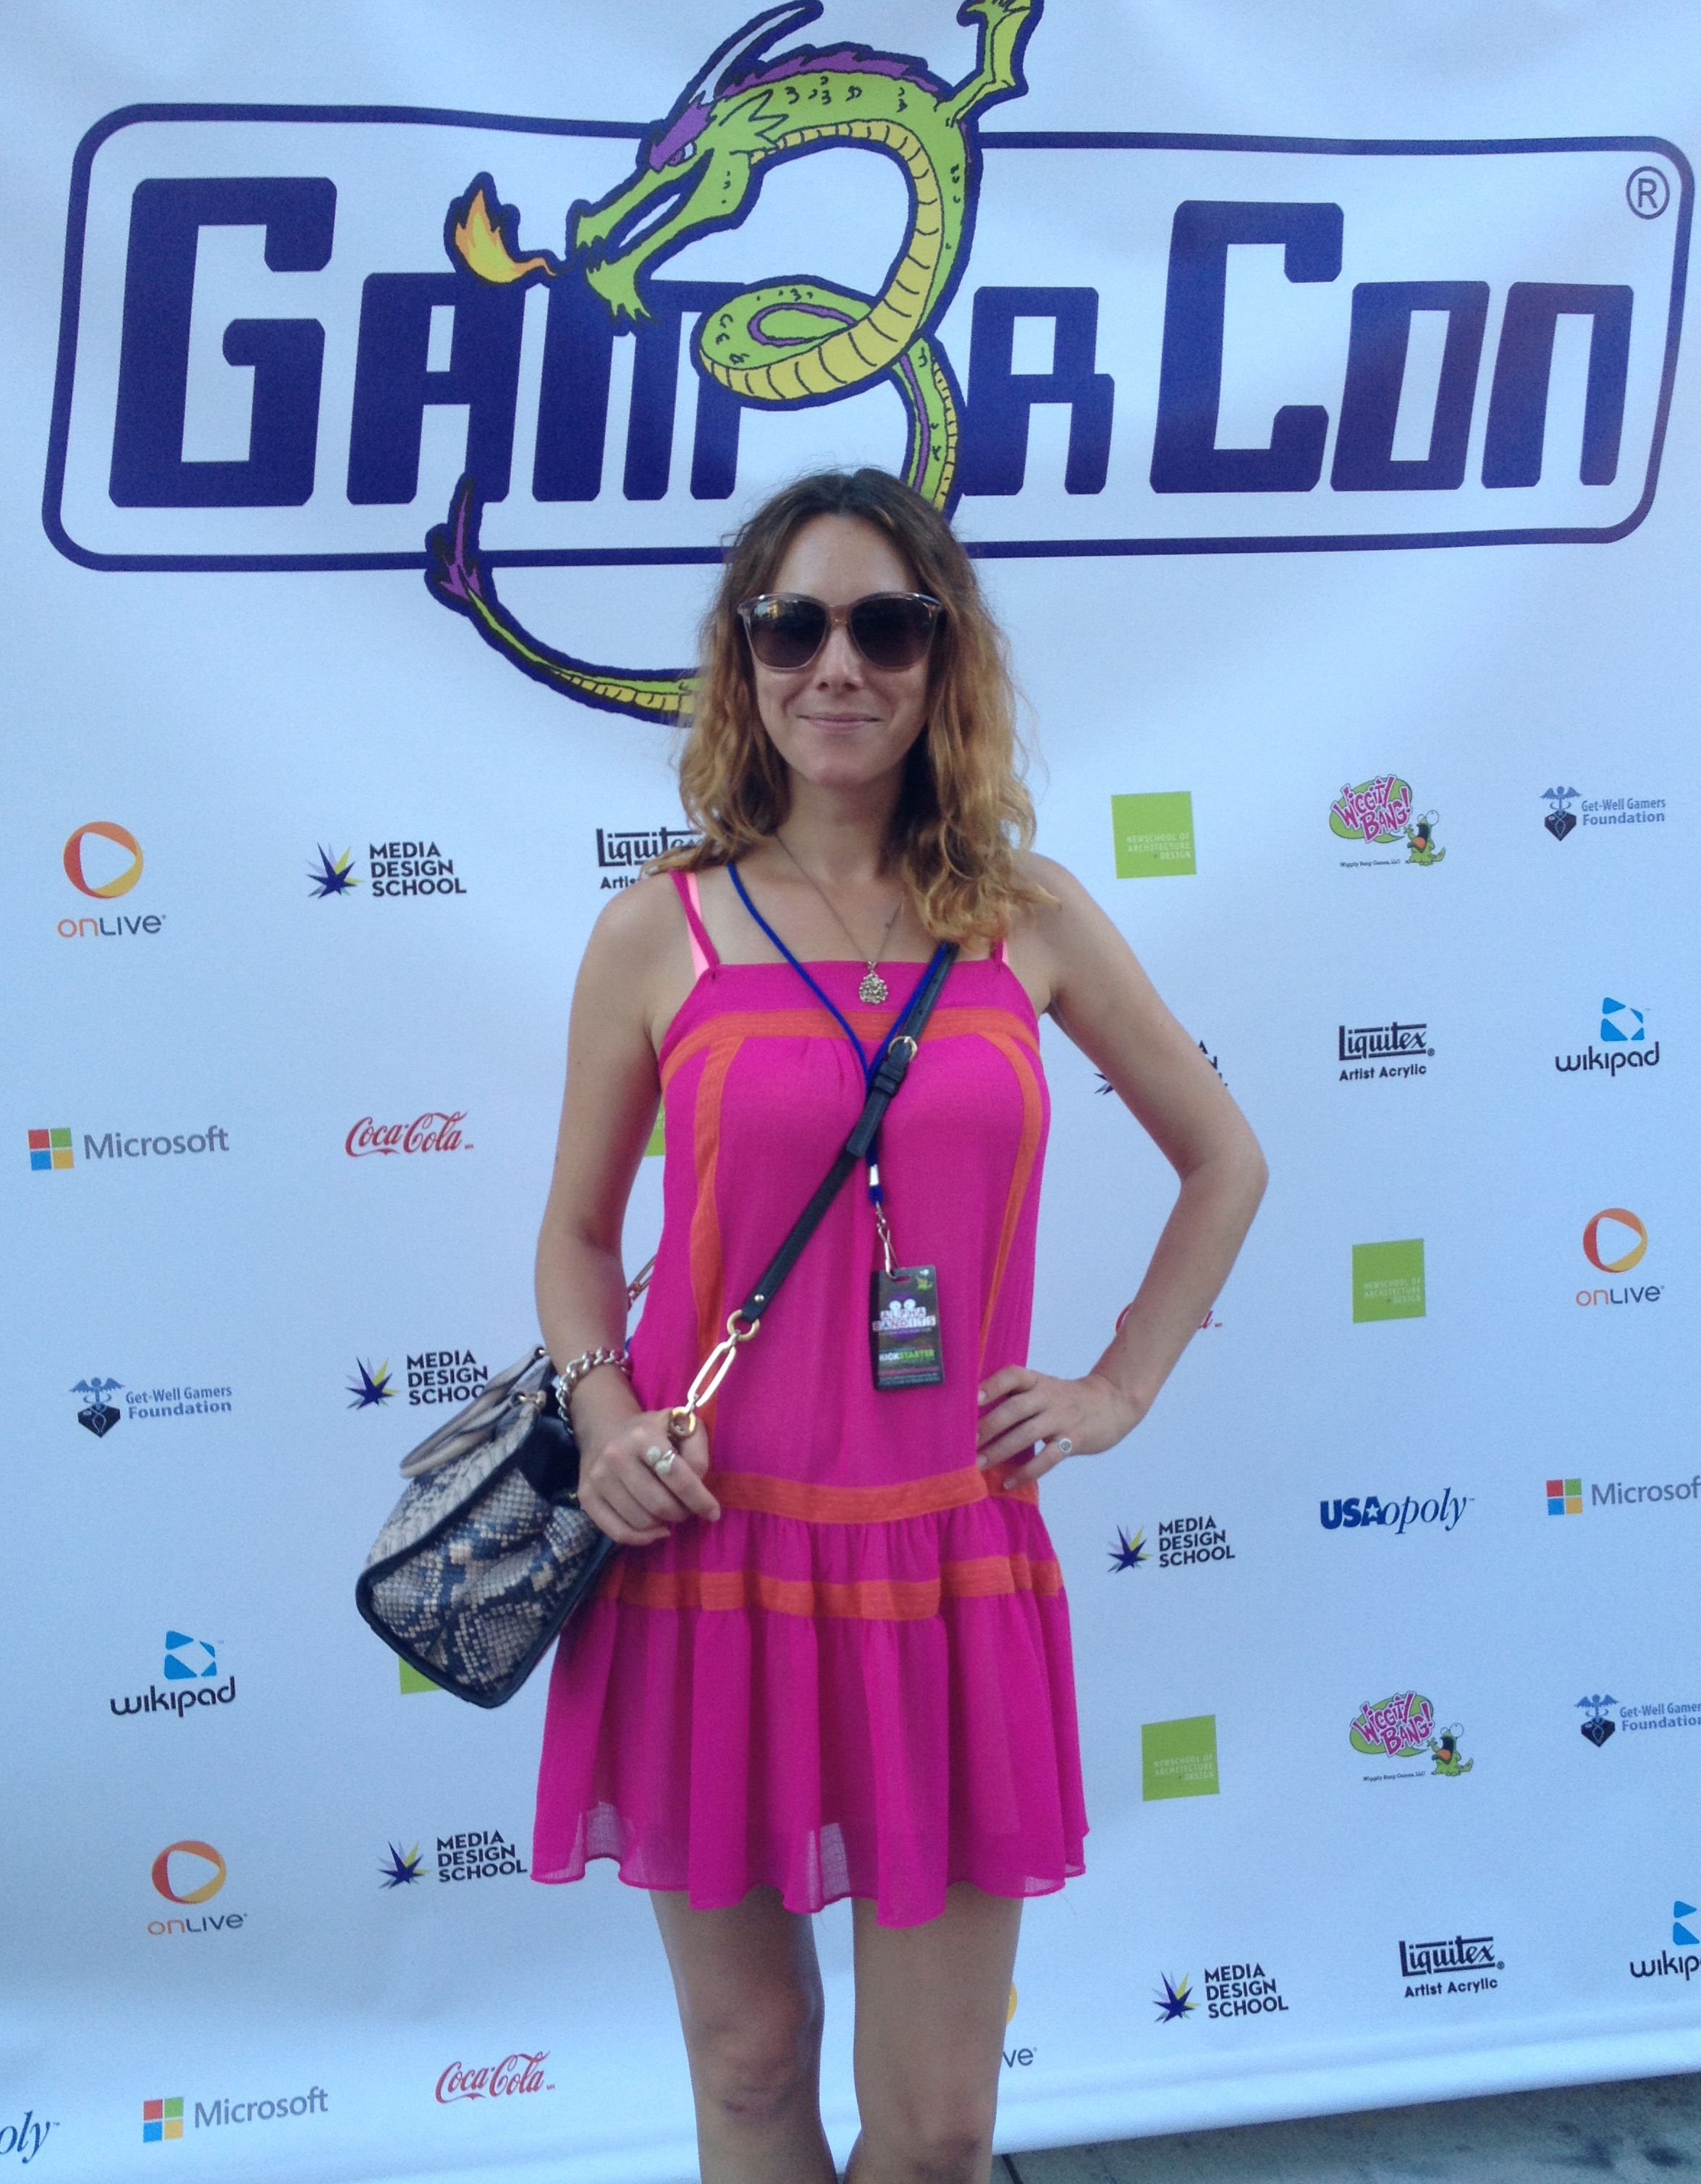 At Gam3rCon 2014, San Diego, CA.